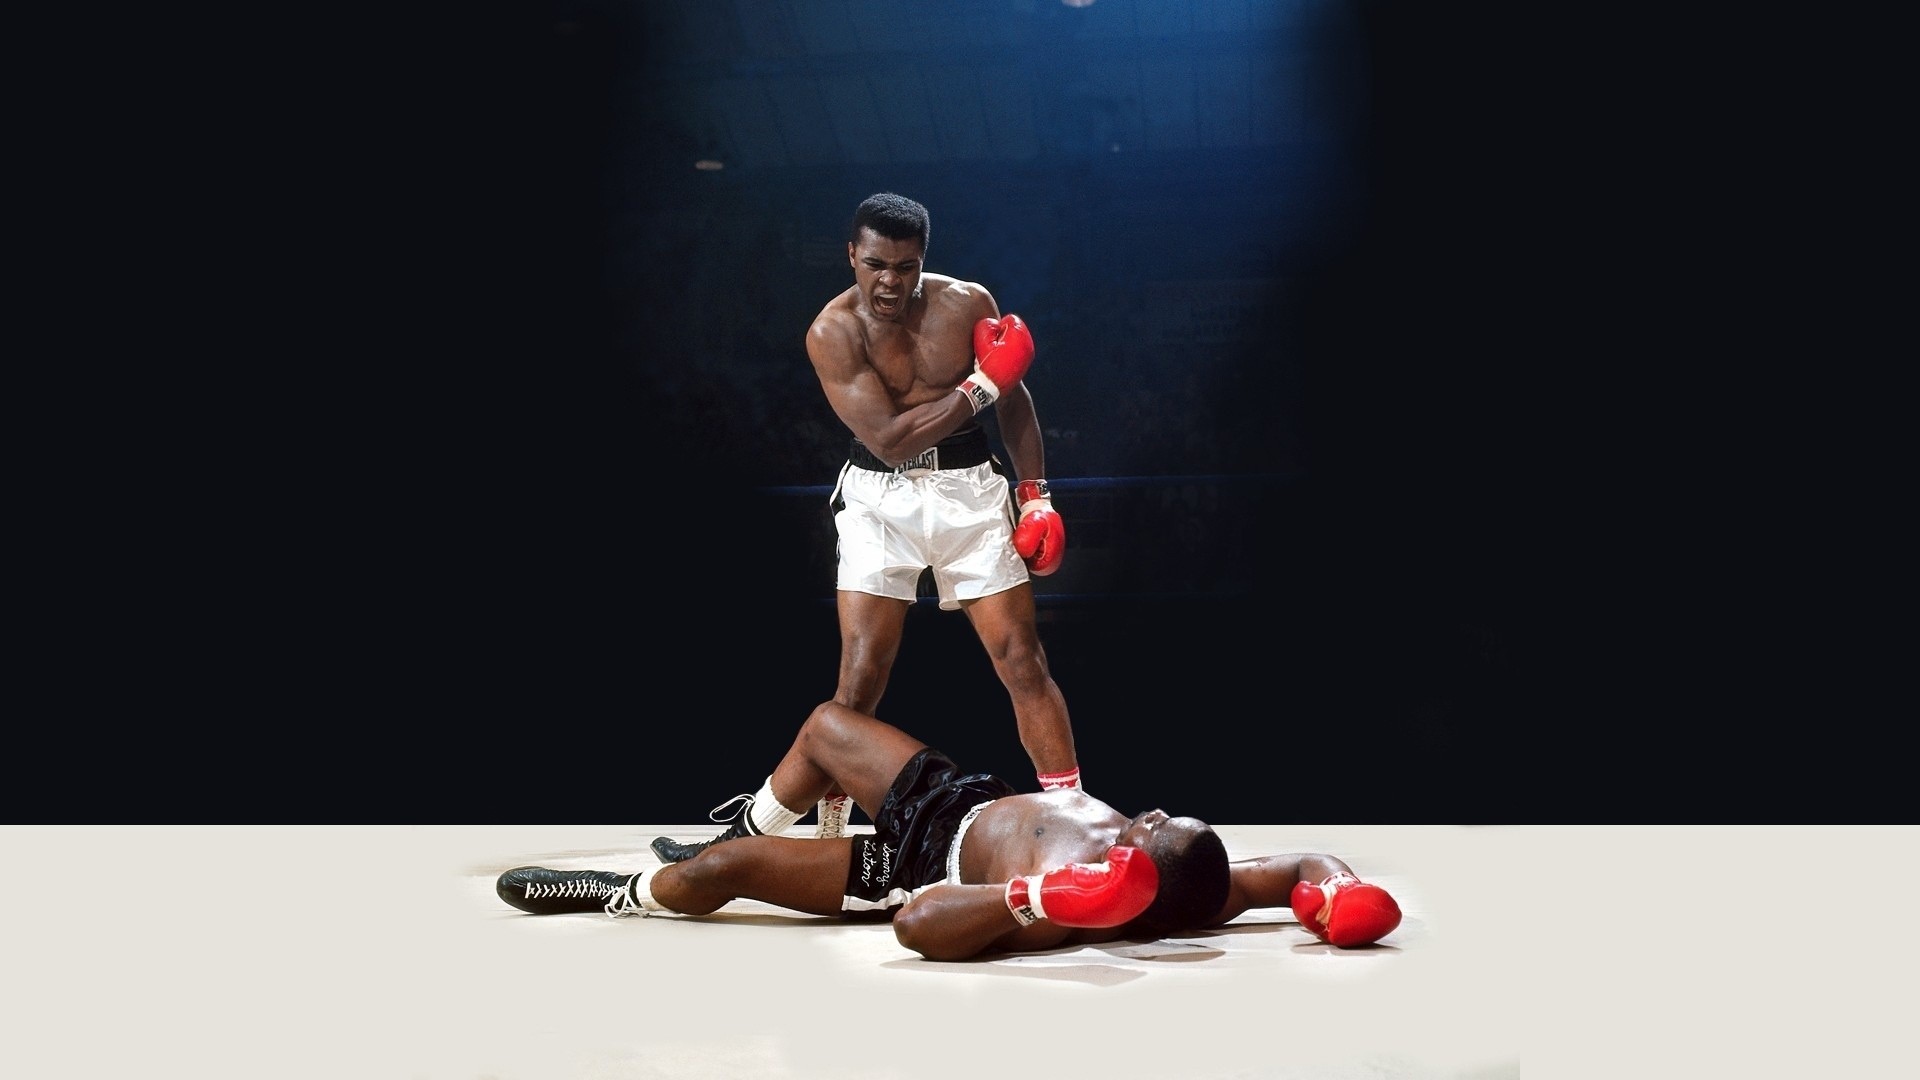 Sports / Muhammad Ali Wallpaper